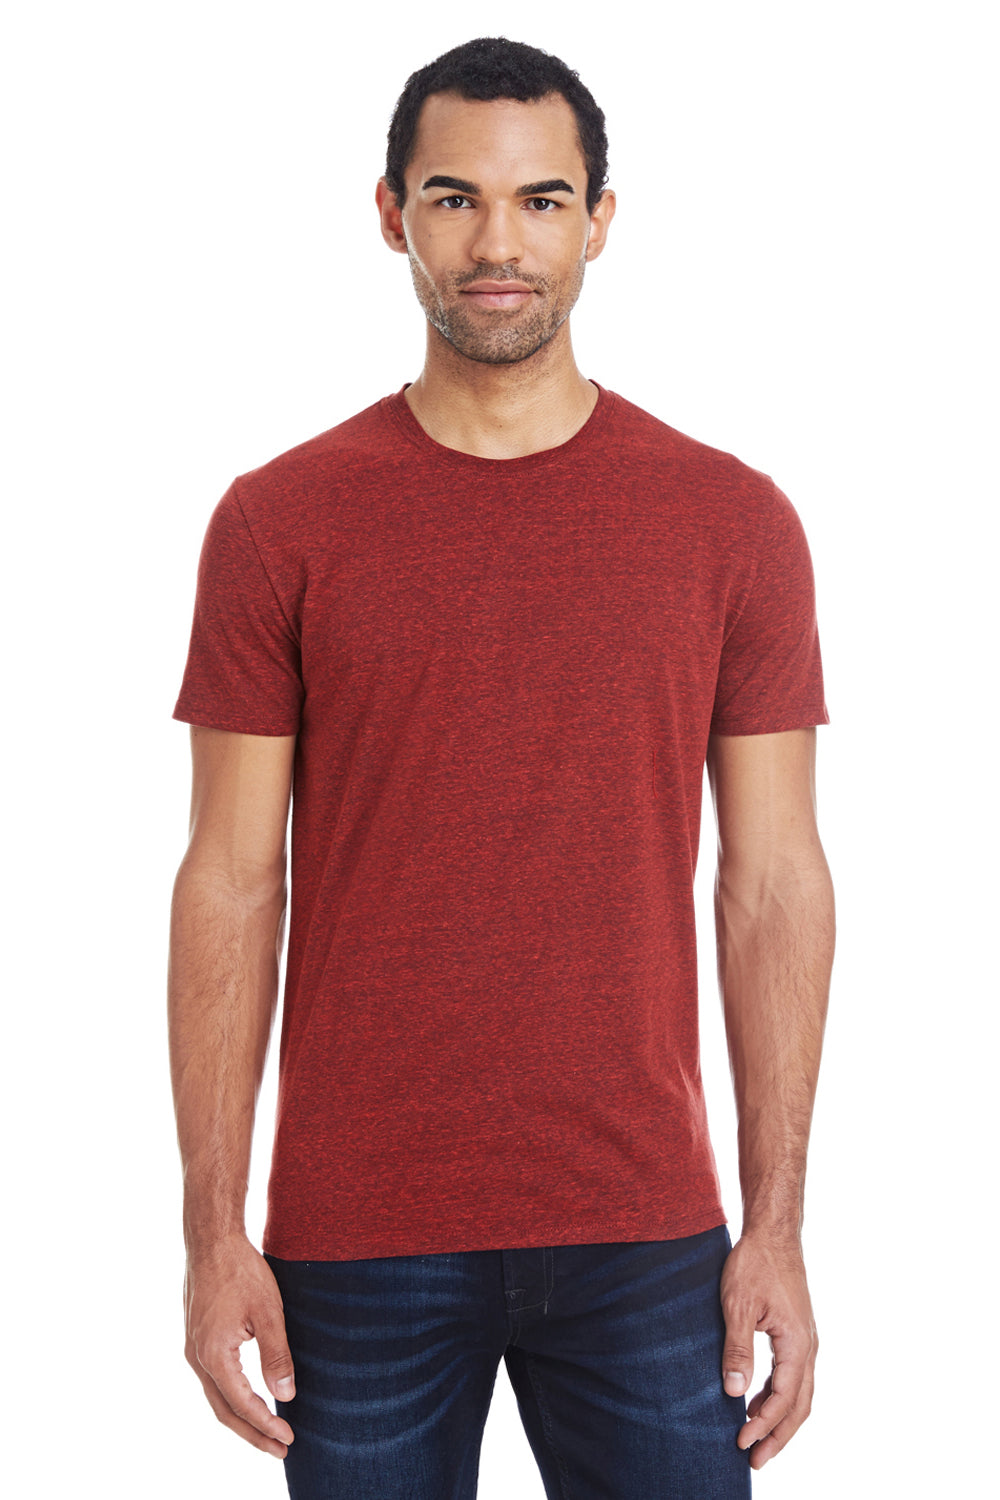 Threadfast Apparel 102A Mens Short Sleeve Crewneck T-Shirt Cardinal Red Front